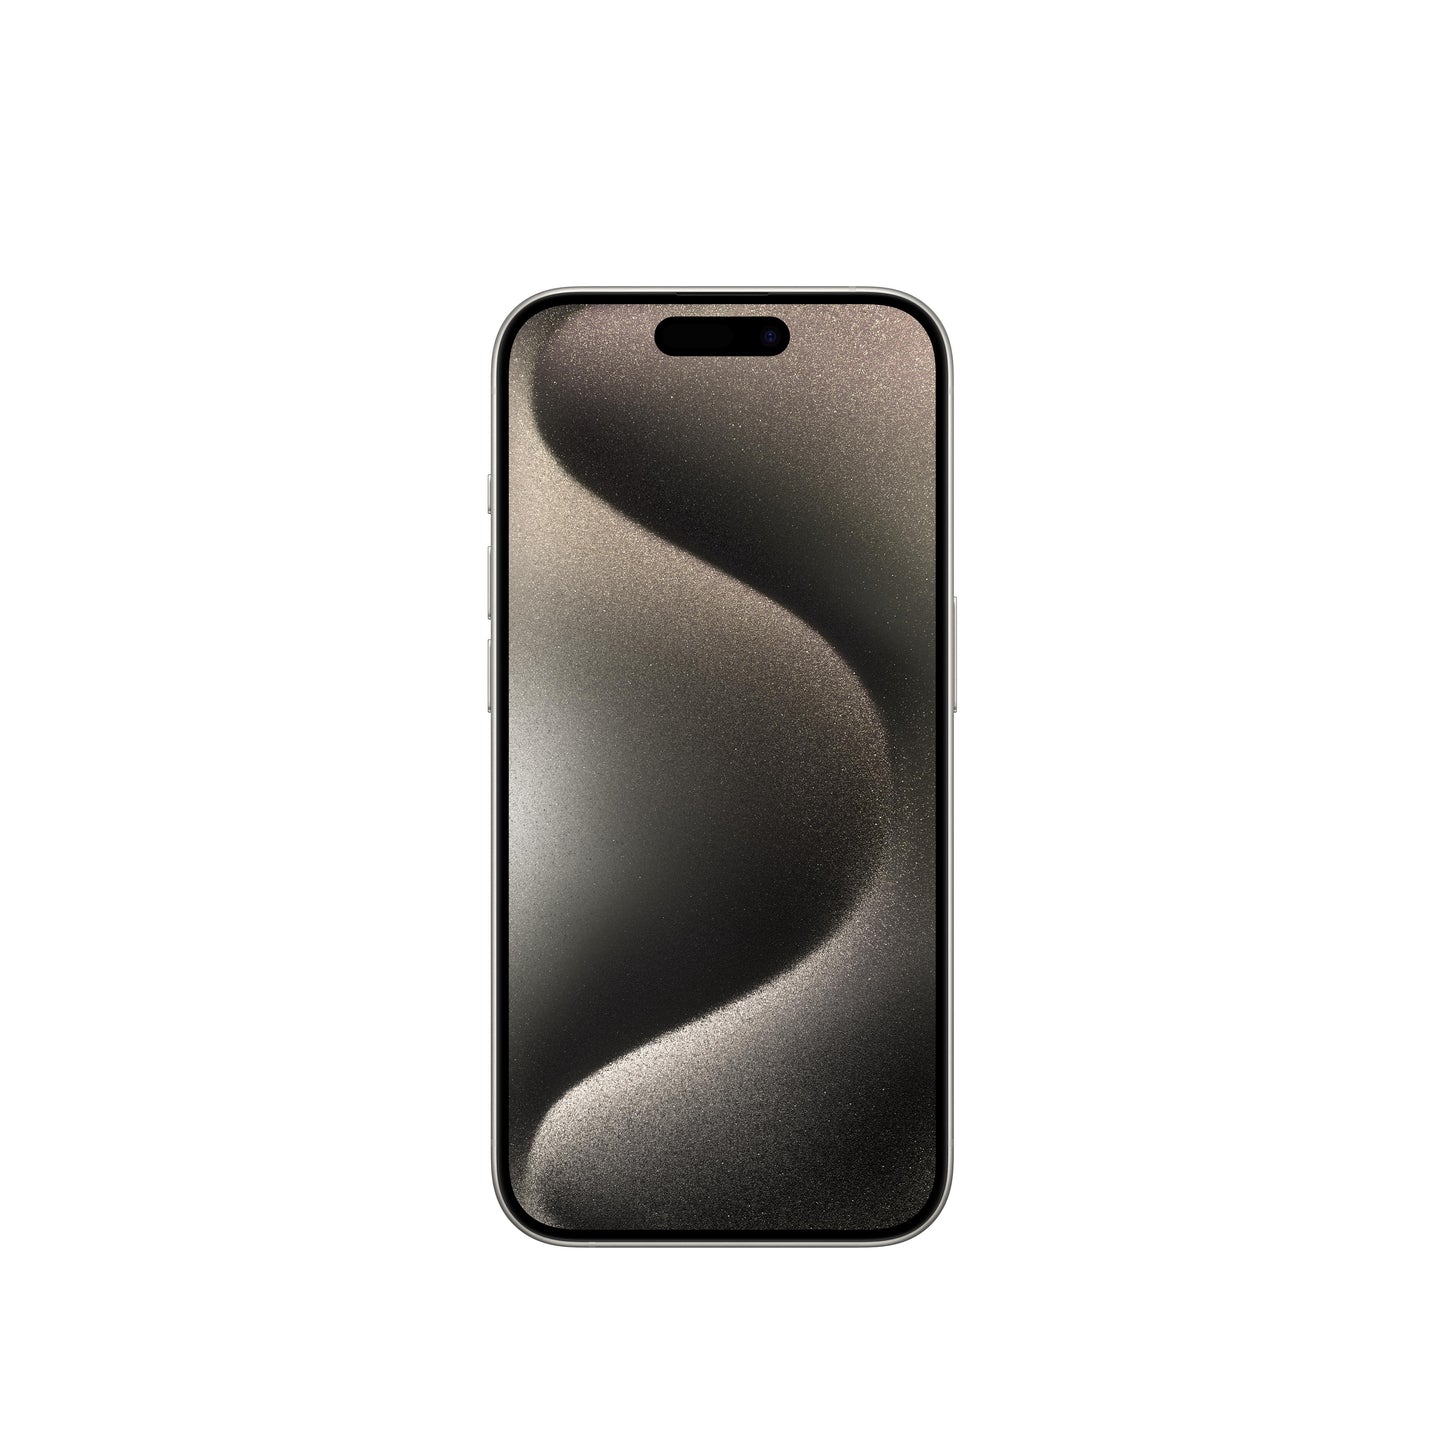 iPhone 15 Pro in Natural Titanium, 256GB Storage. EMI available |Get best offers for iphone 15 pro [variant] Natural Titanium 256GB.